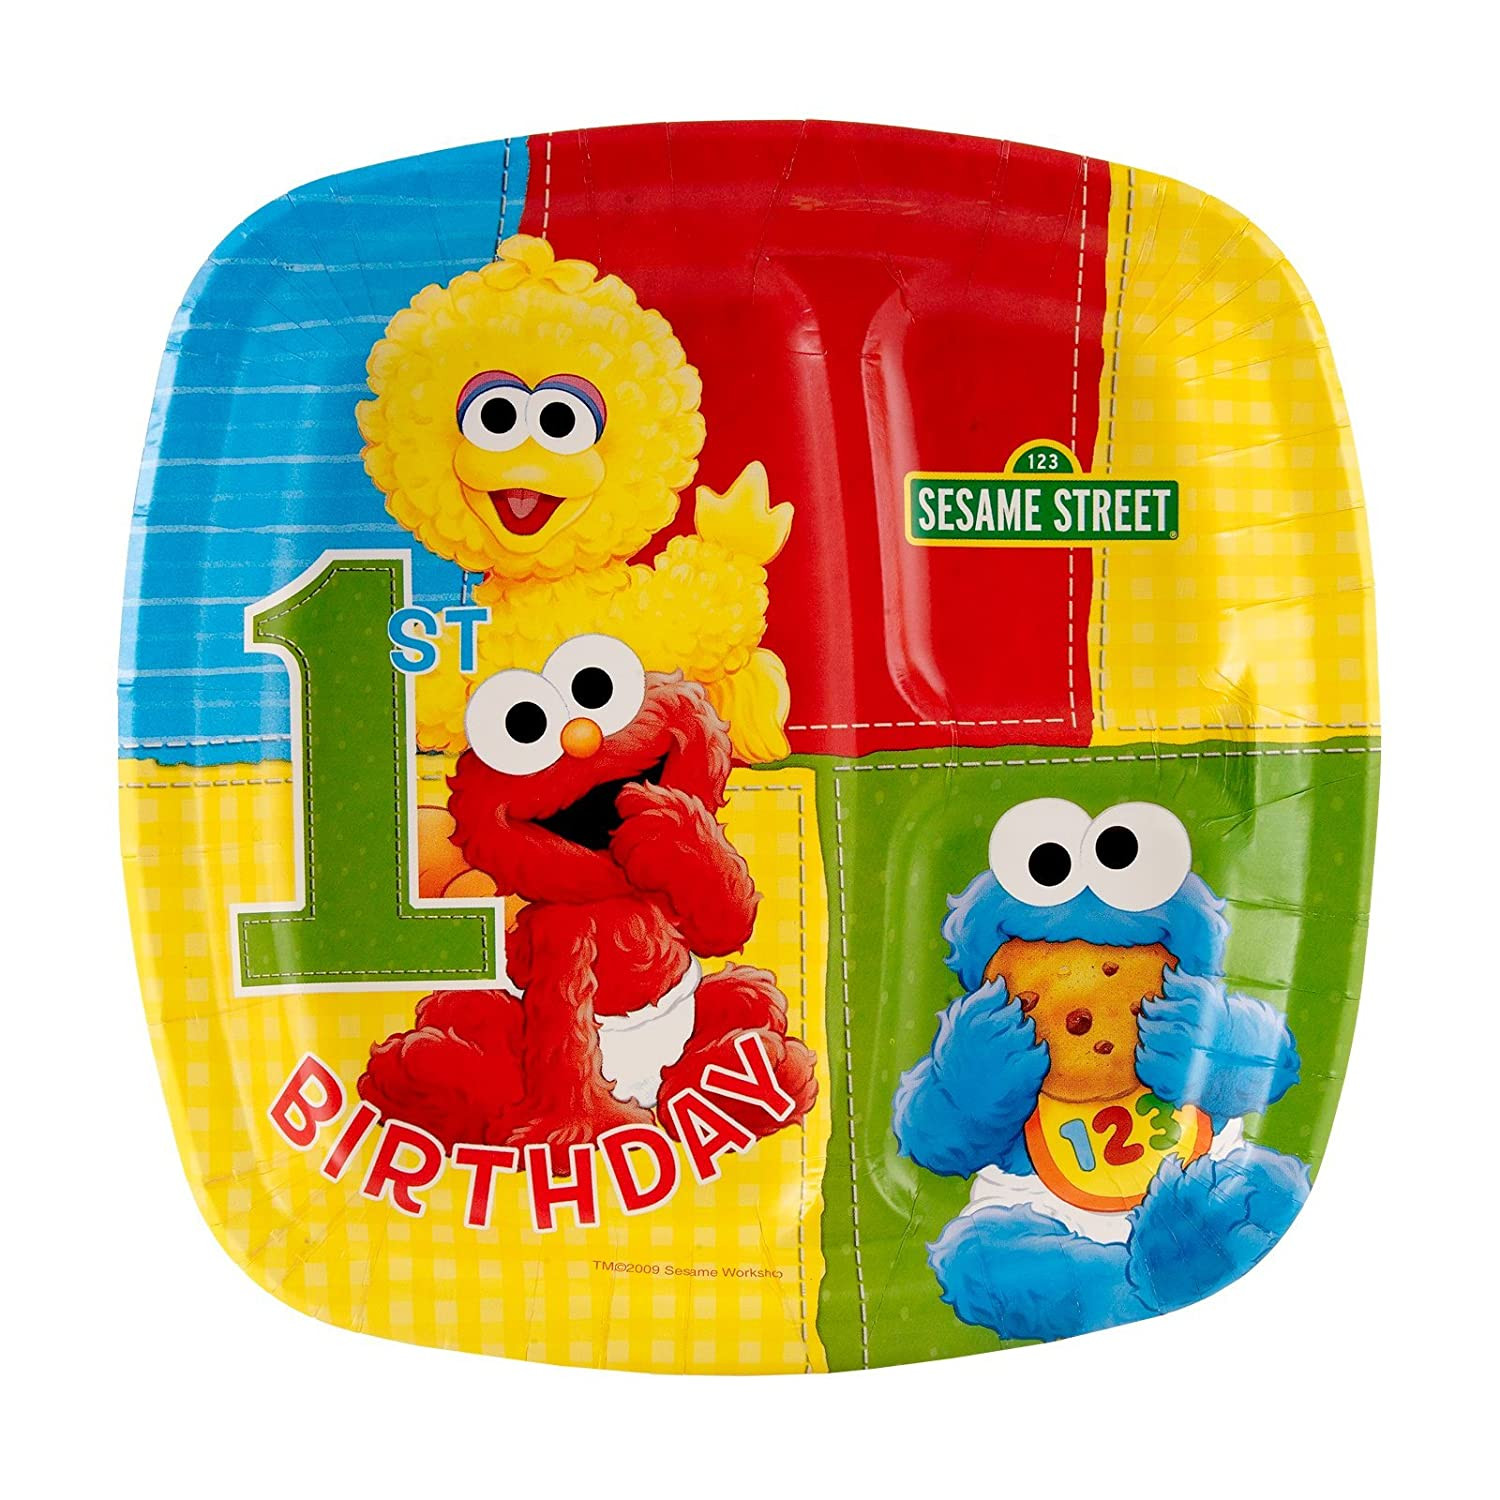 Sesame Street 1st Birthday Party Supplies
 Sesame Street First Birthday Party Supplies